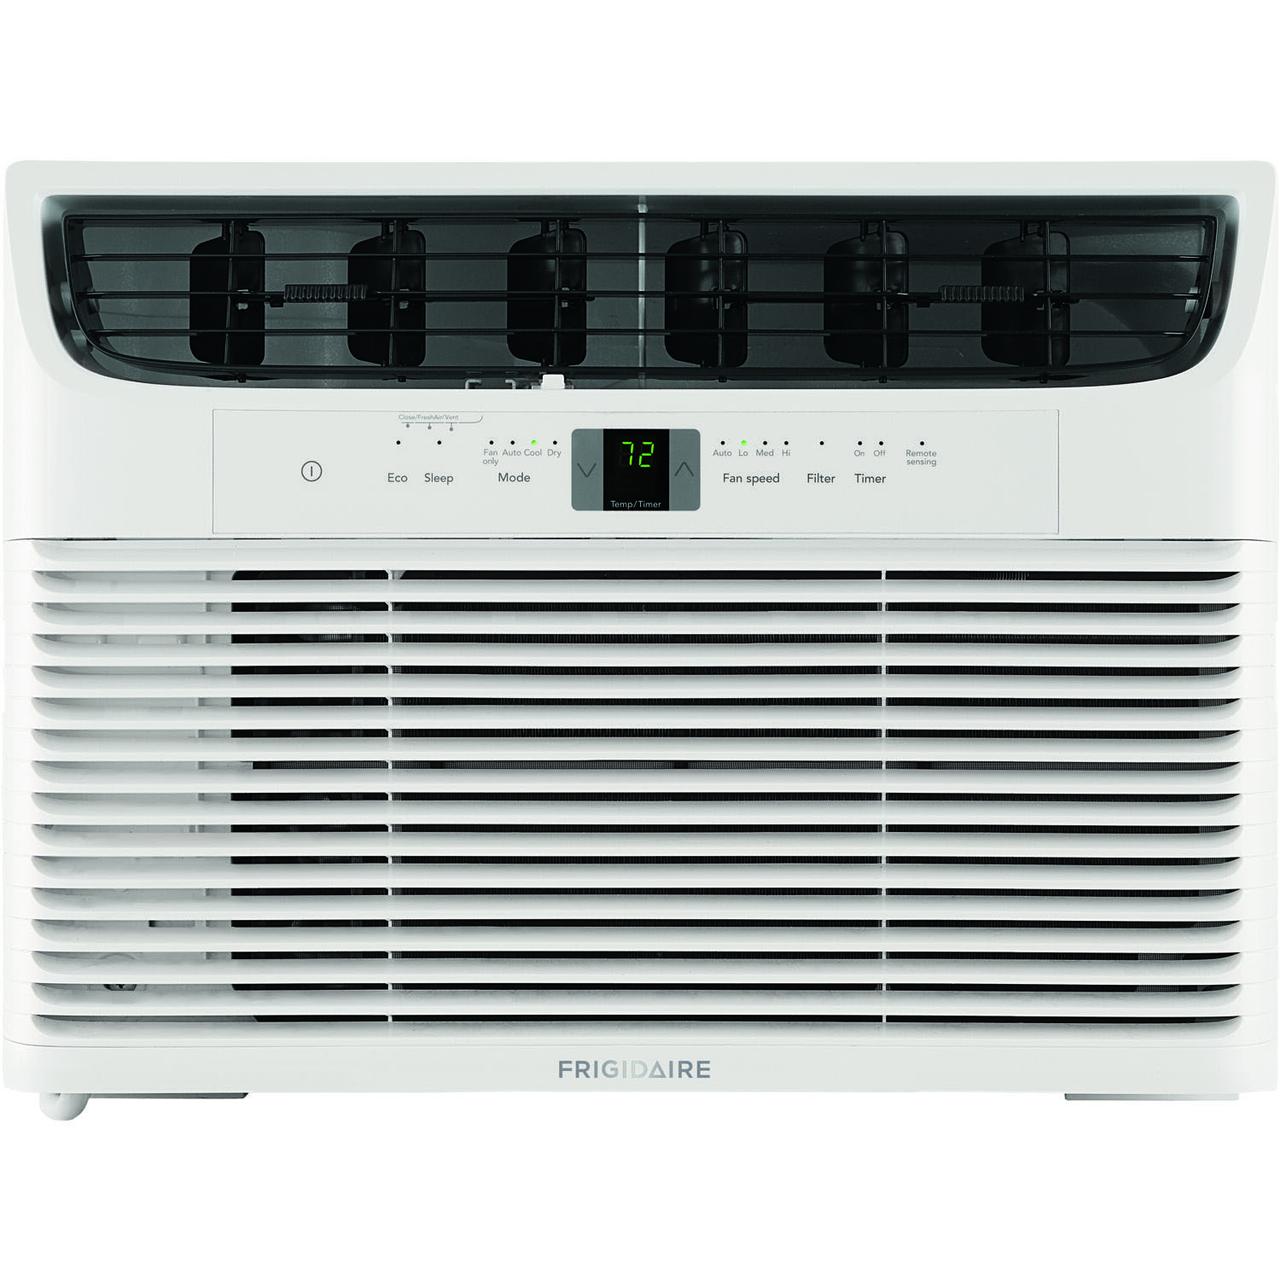 Frigidaire 15,100 BTU Window Air Conditioner with Remote in White - image 4 of 7